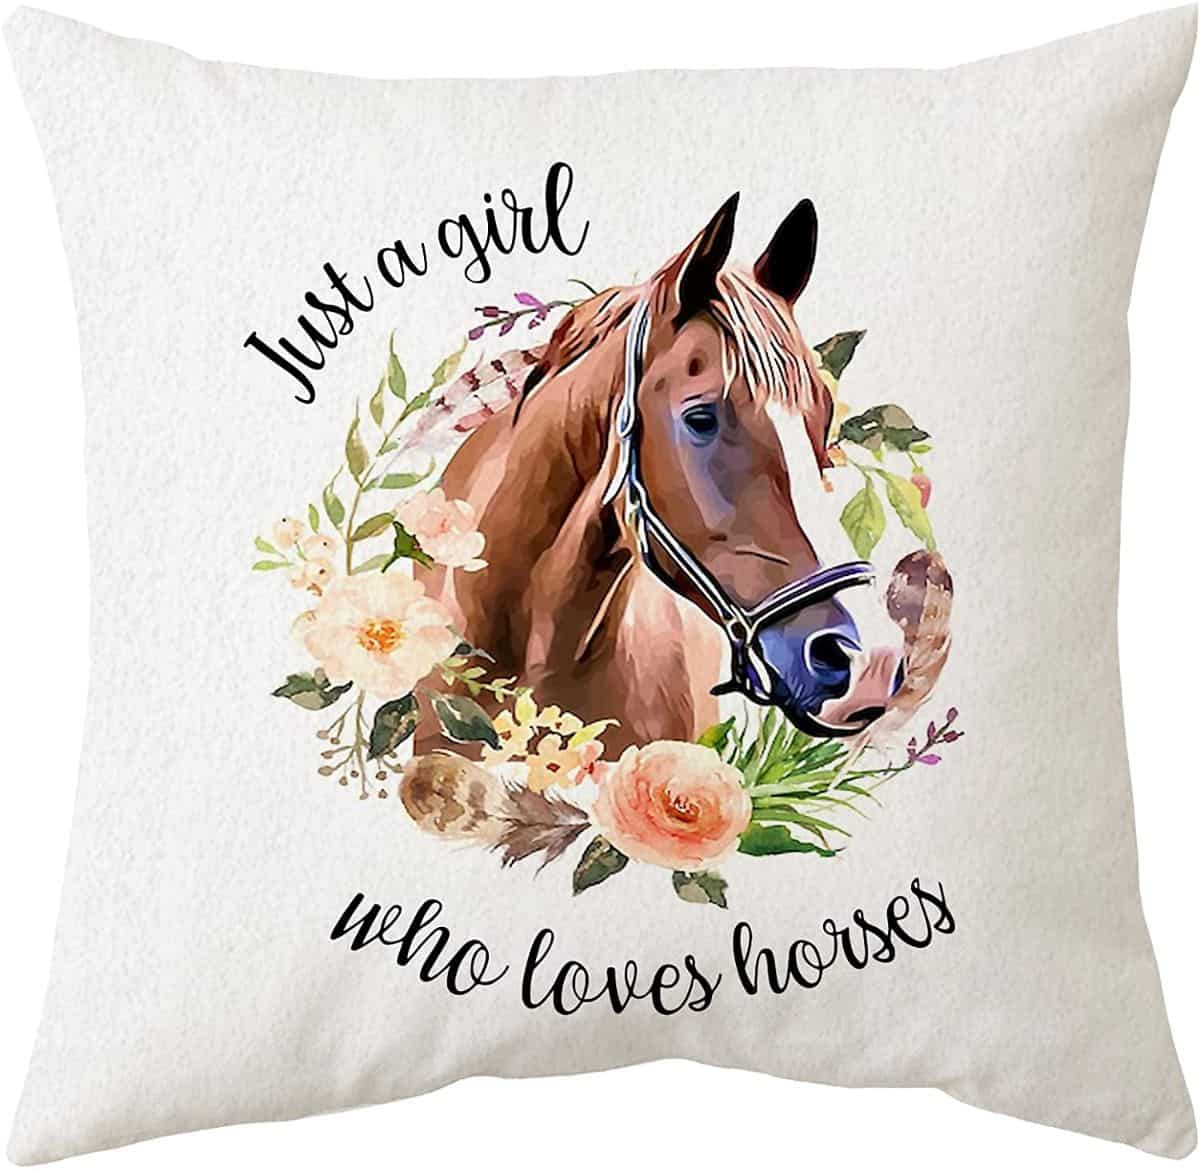 Horse-Themed Pillow